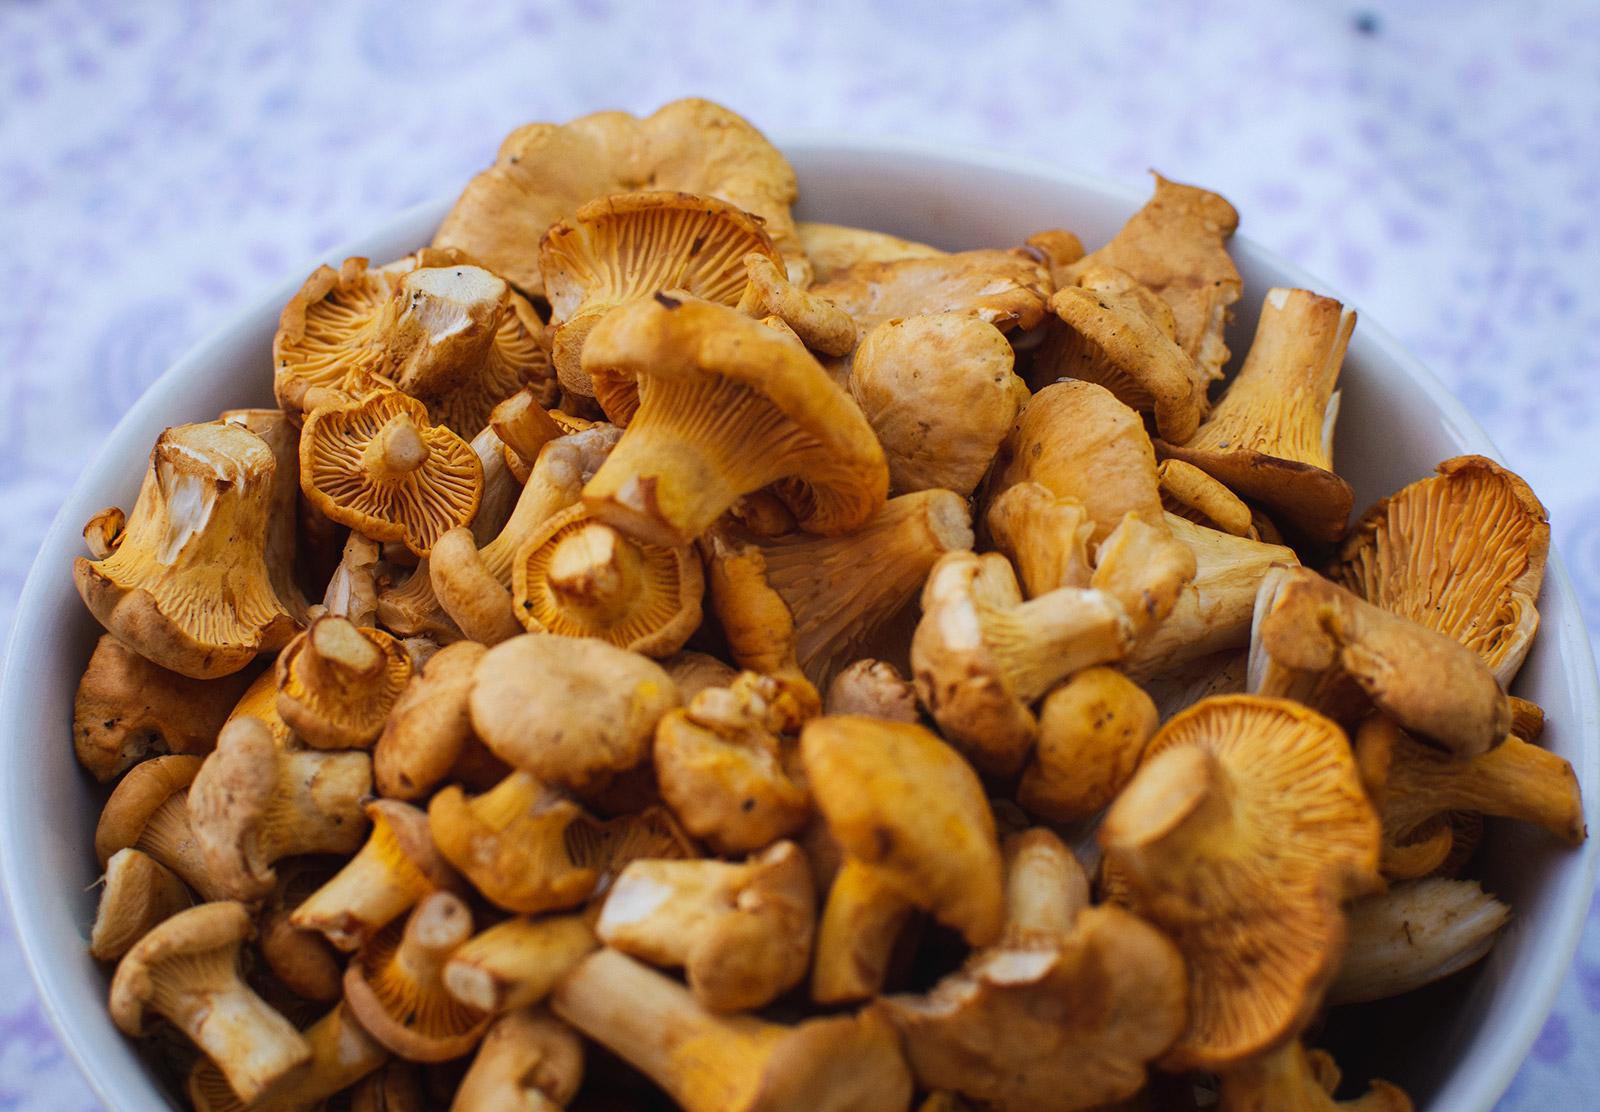 Bowl of Chanterelle mushrooms